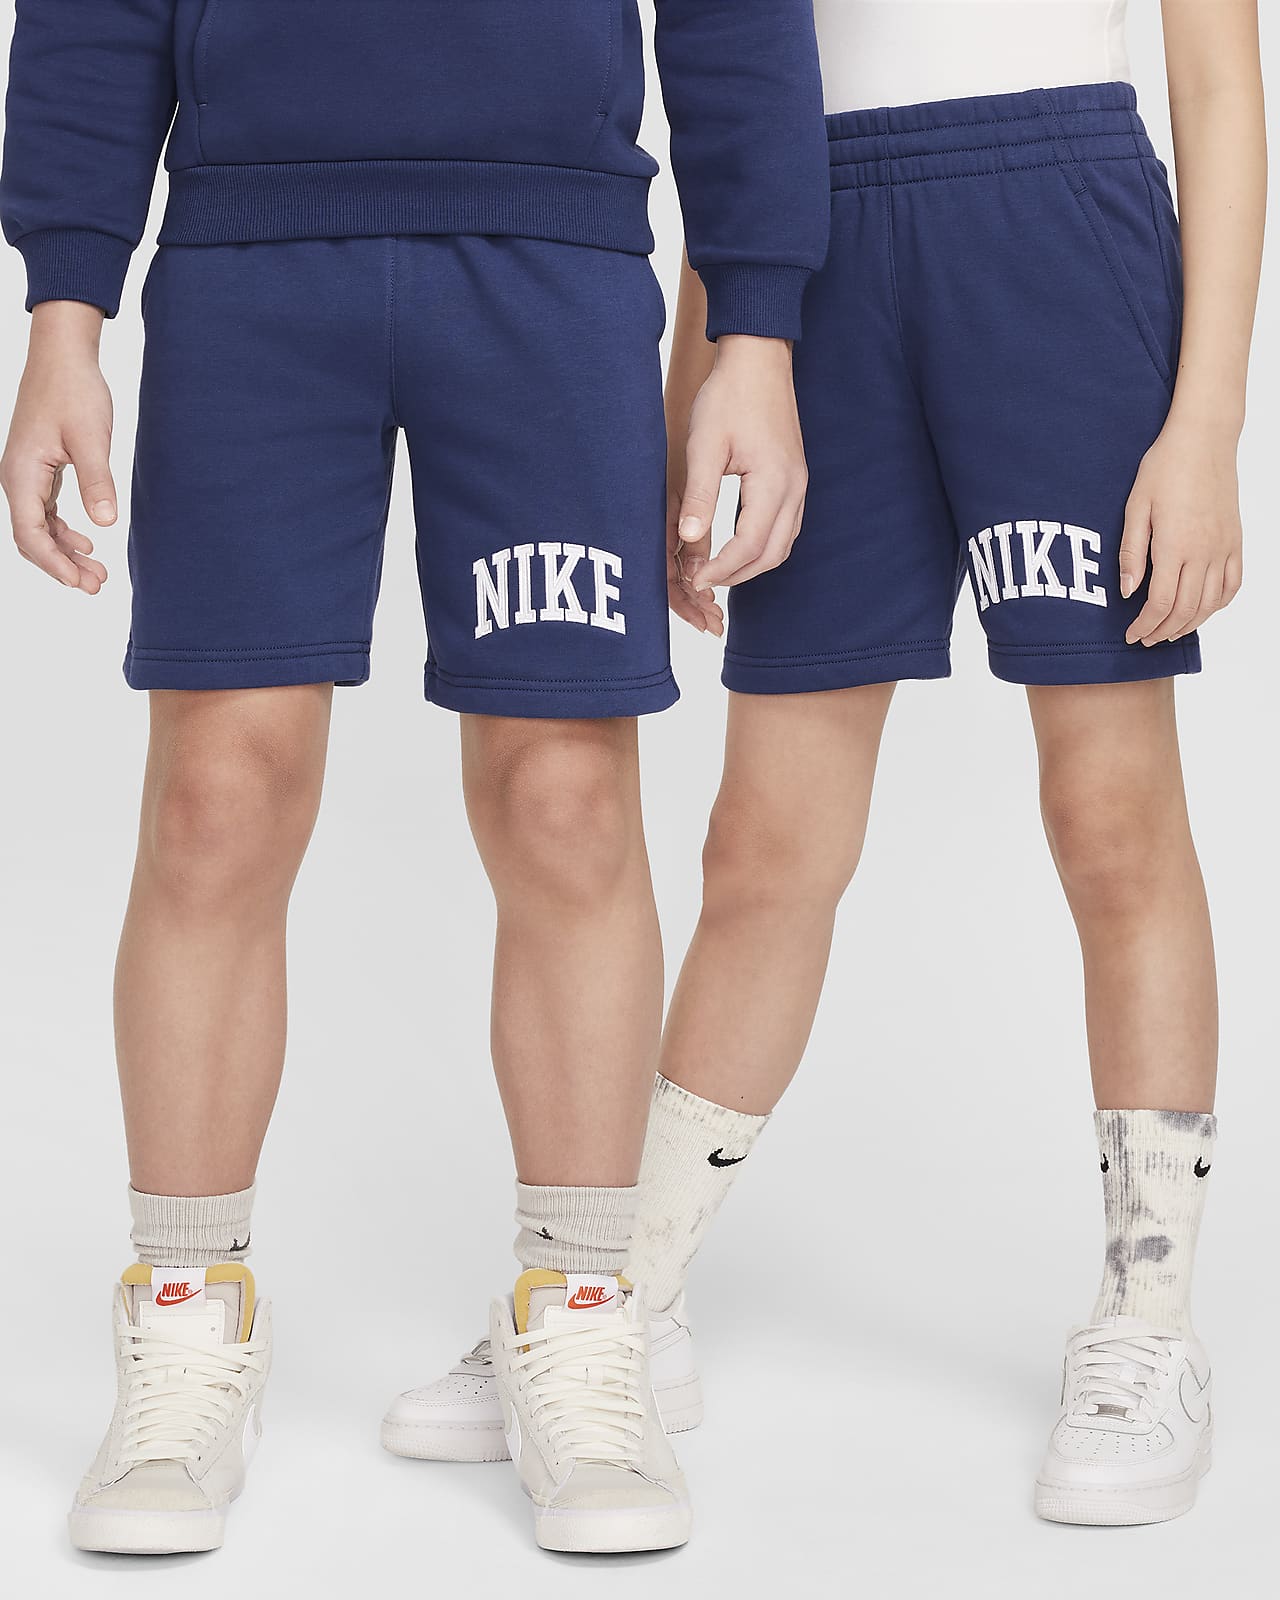 Shorts de French Terry para niños talla grande Nike Sportswear Club